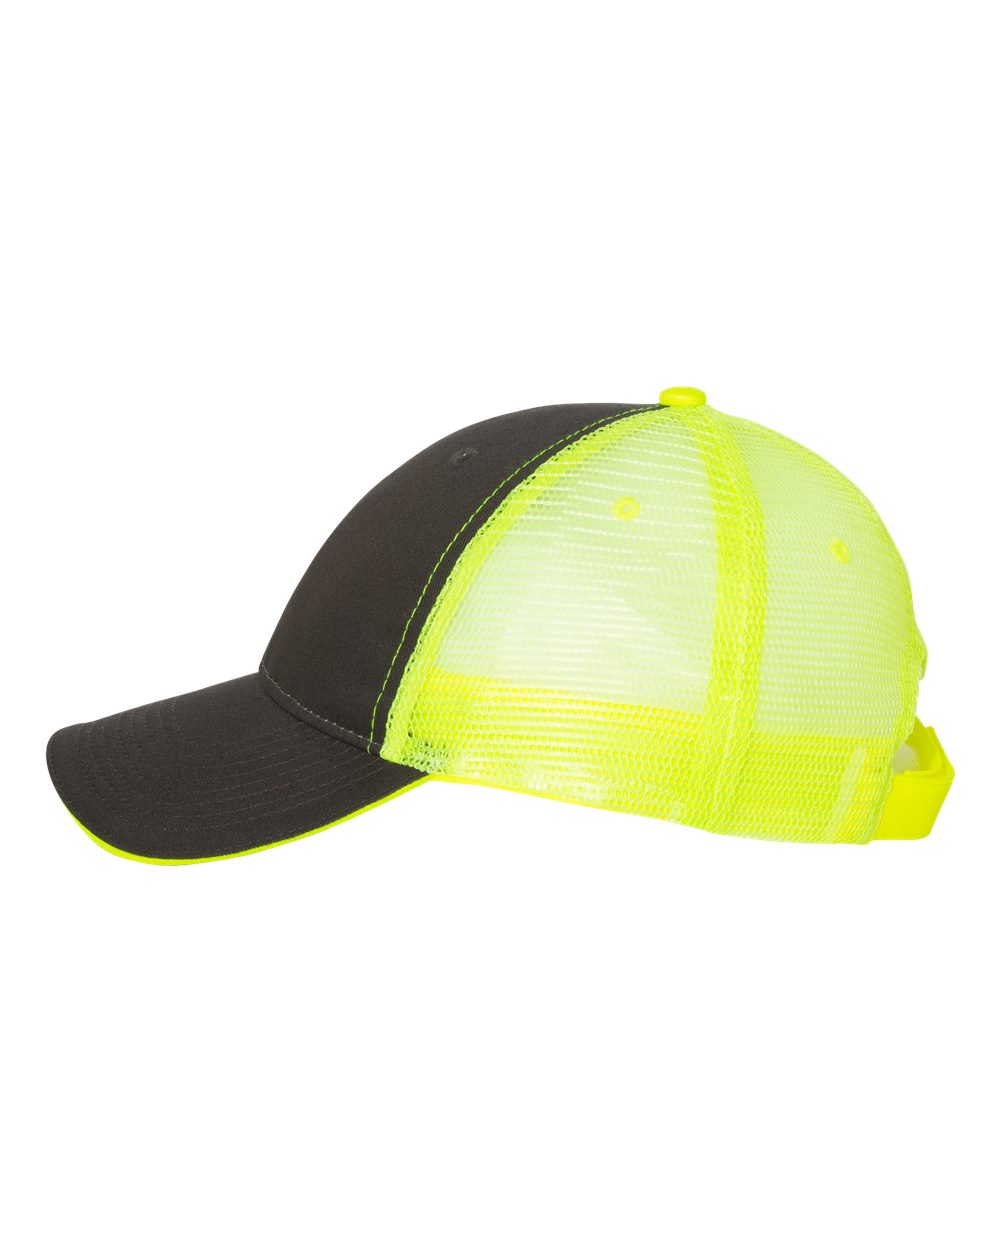 Sandwich Trucker Cap - Charcoal/Neon Yellow